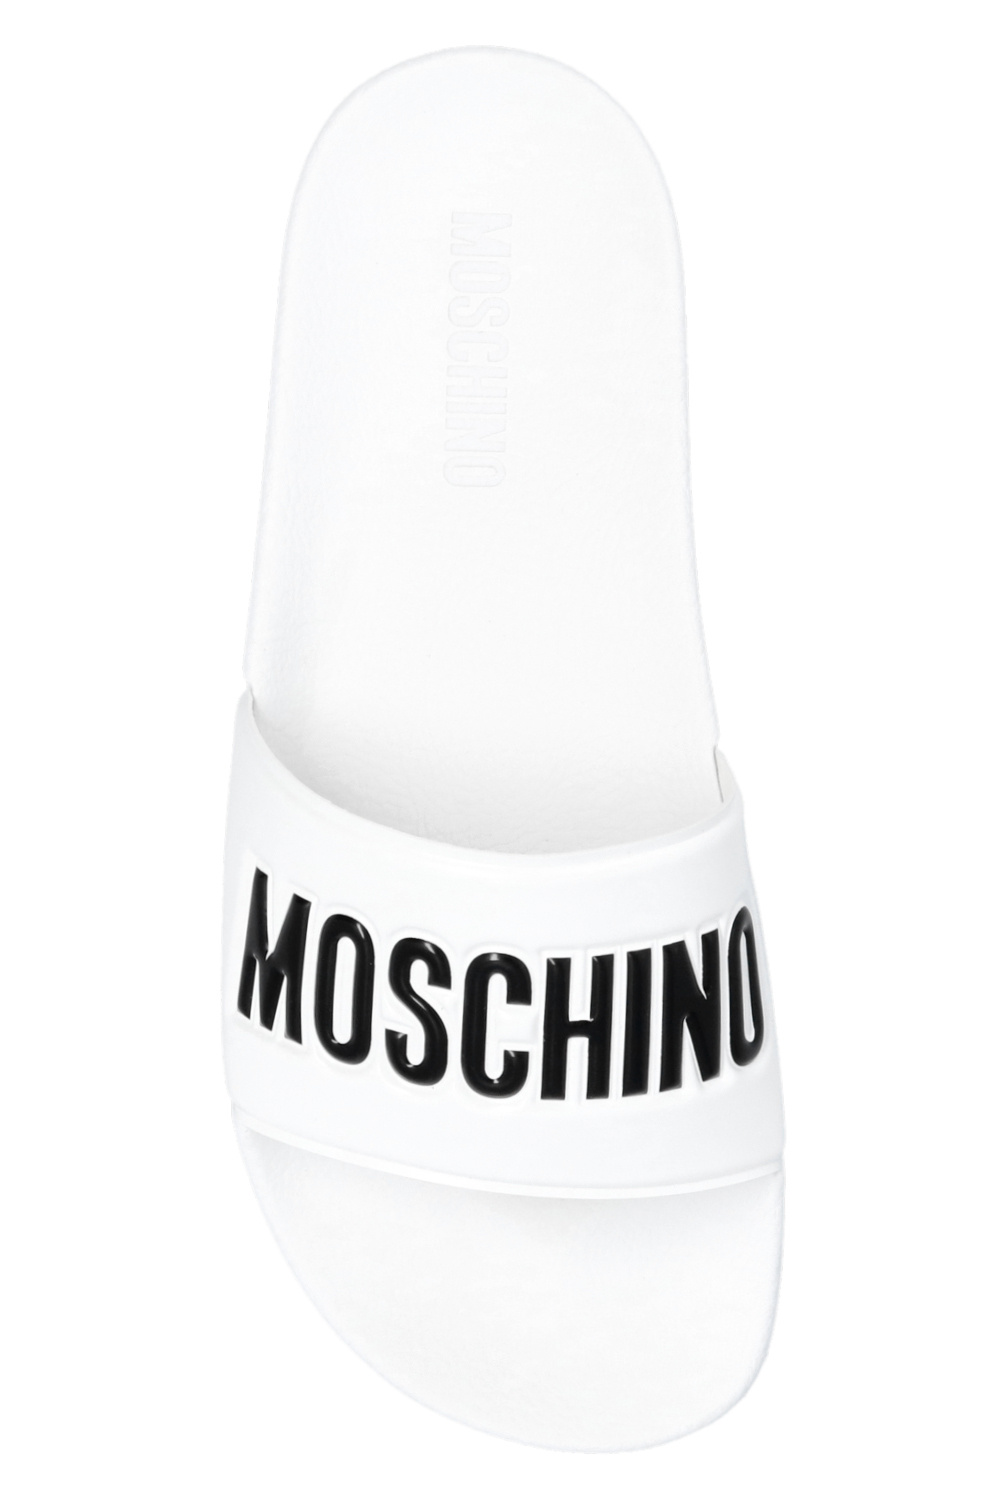 Moschino Poppy Block Heel Sandals